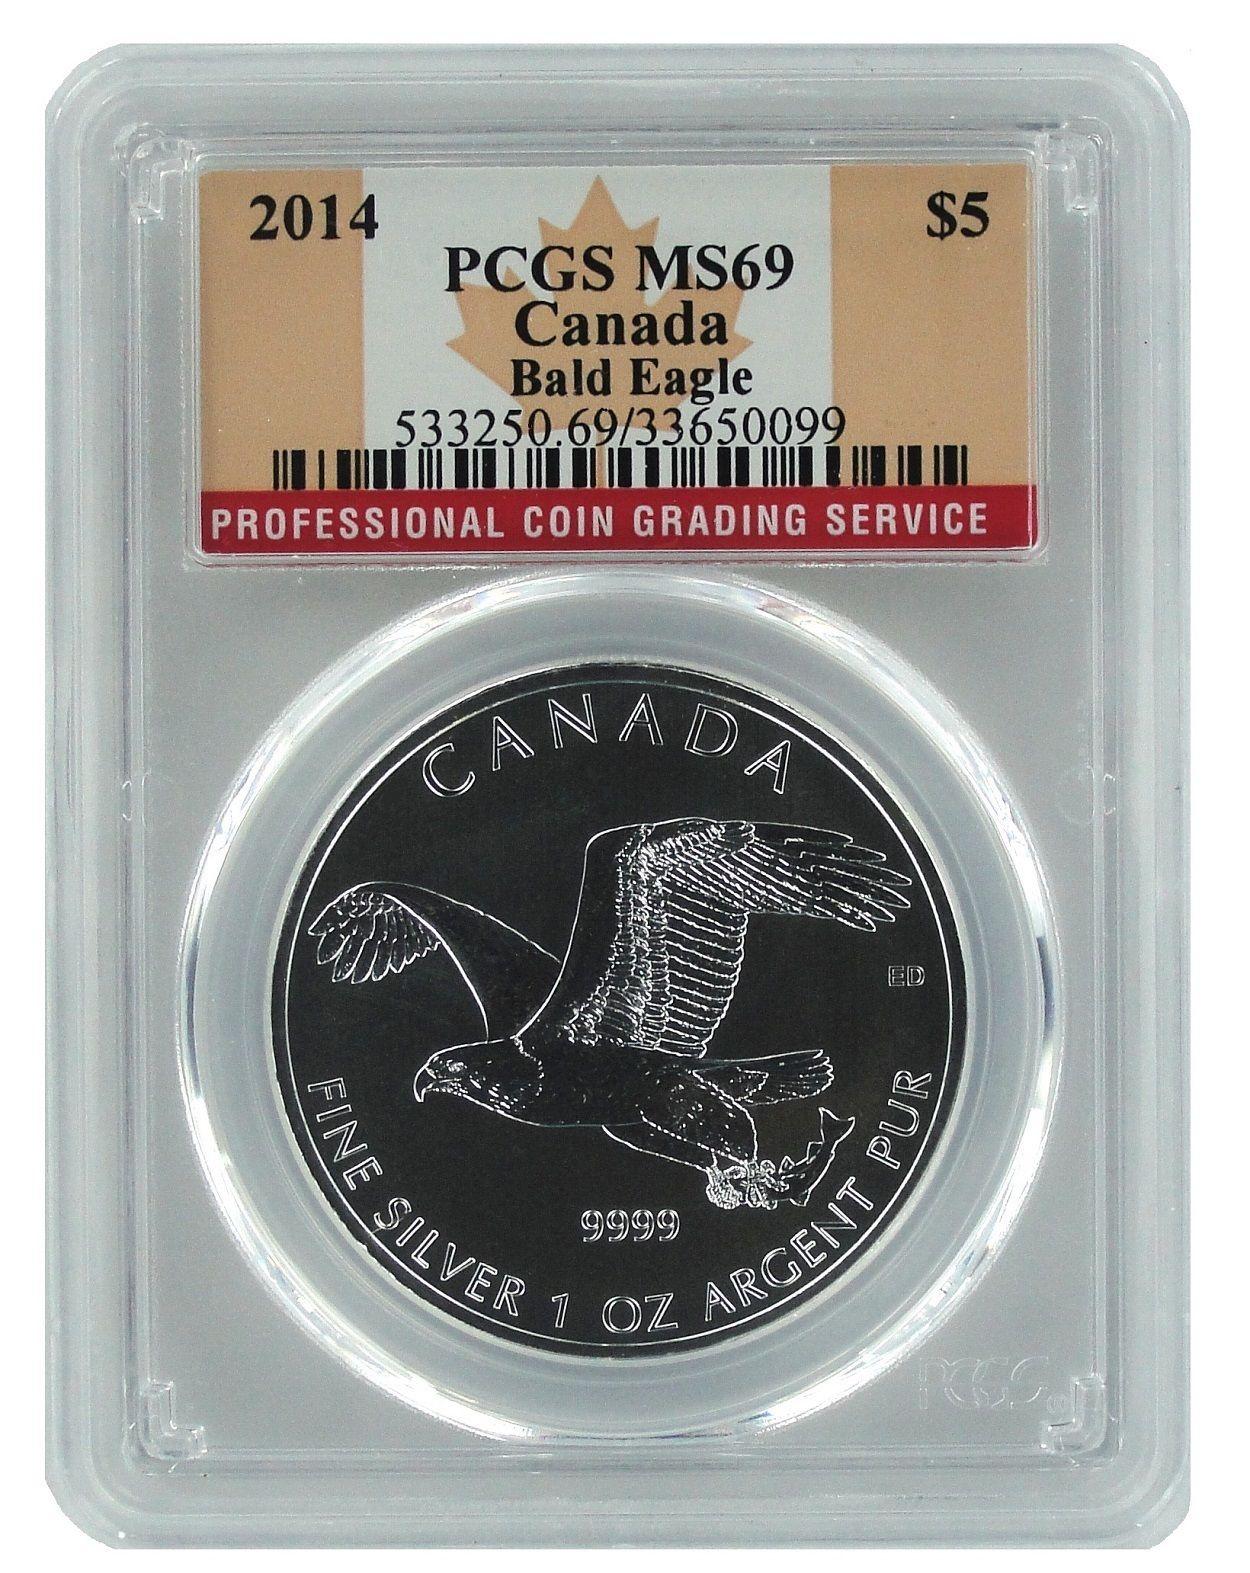 2014 Canada Silver Bald Eagle, PCGS MS69 Flag Label, ONE OUNCE .999 FINE SILVER